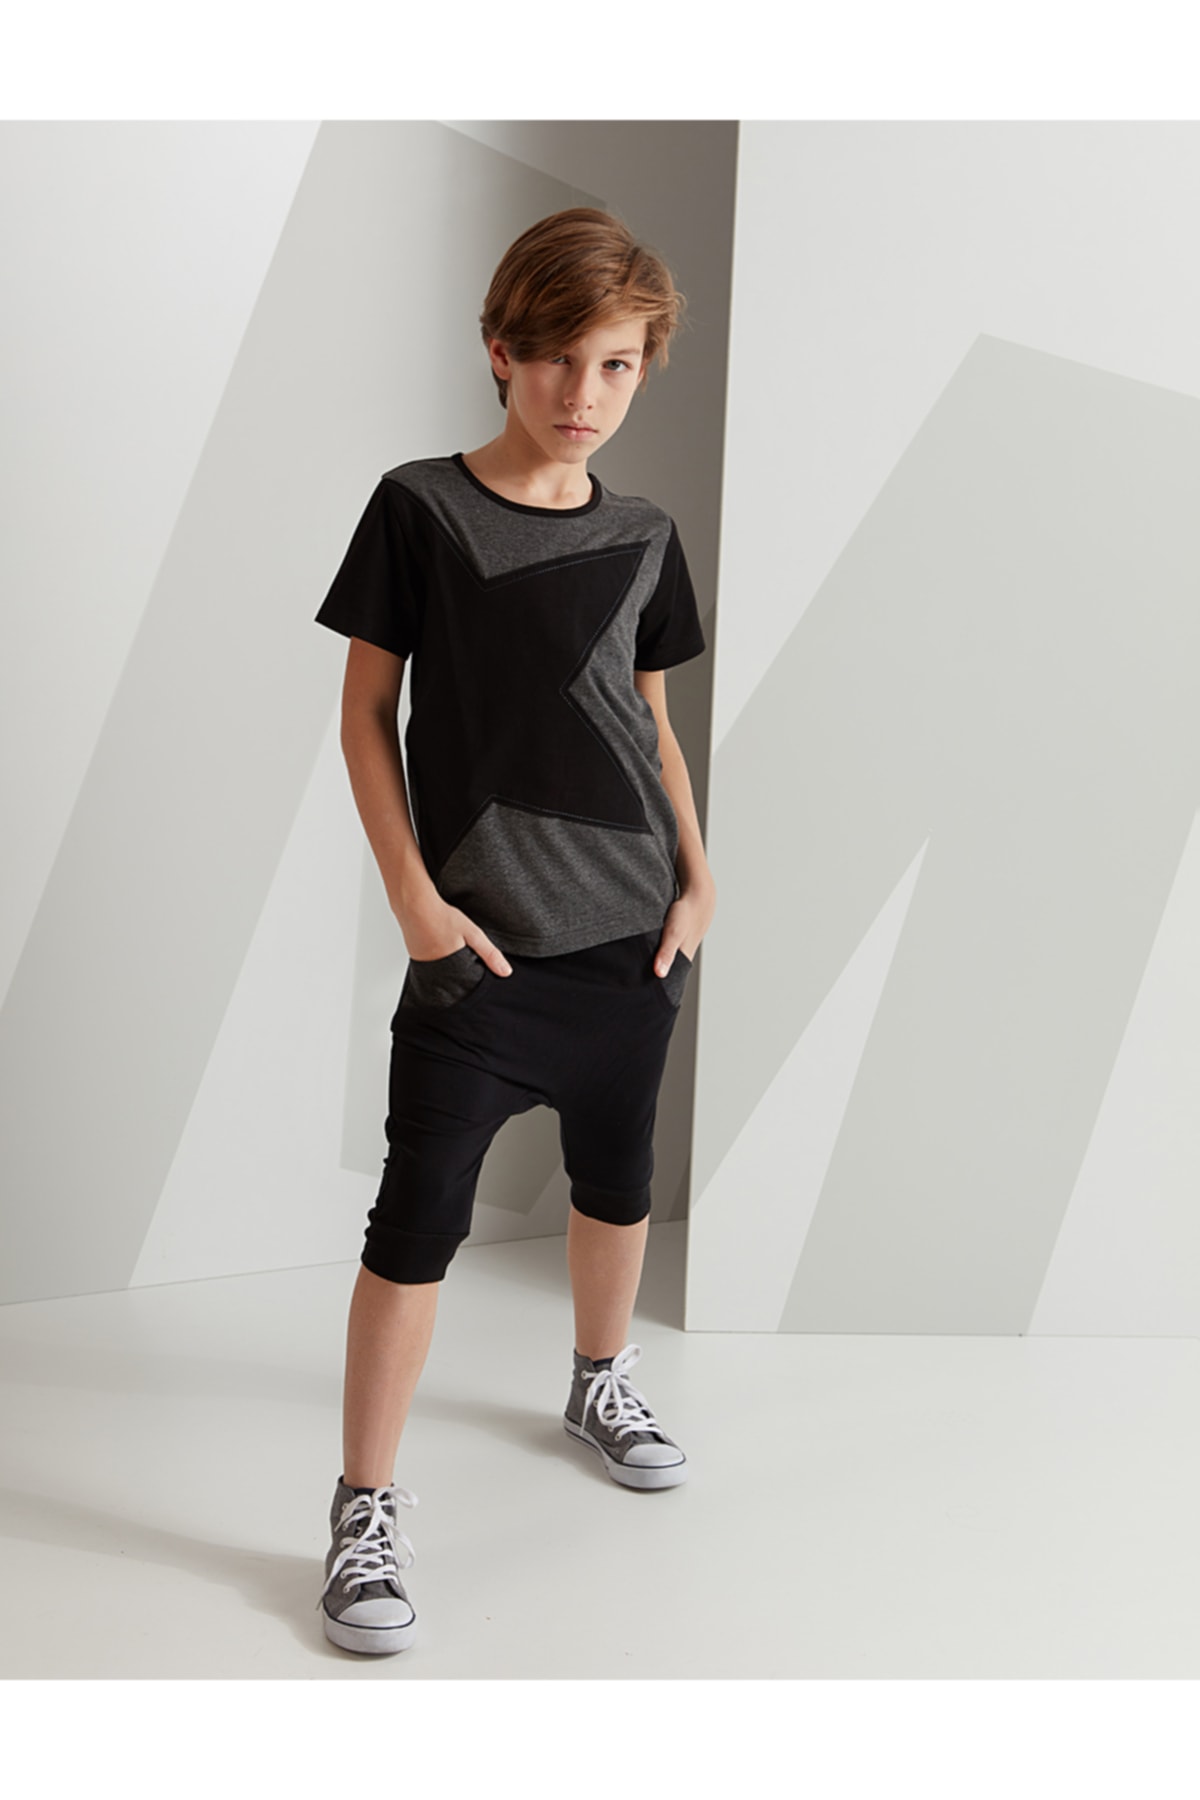 mshb&g Gray Star Boys T-shirt Capri Shorts Set